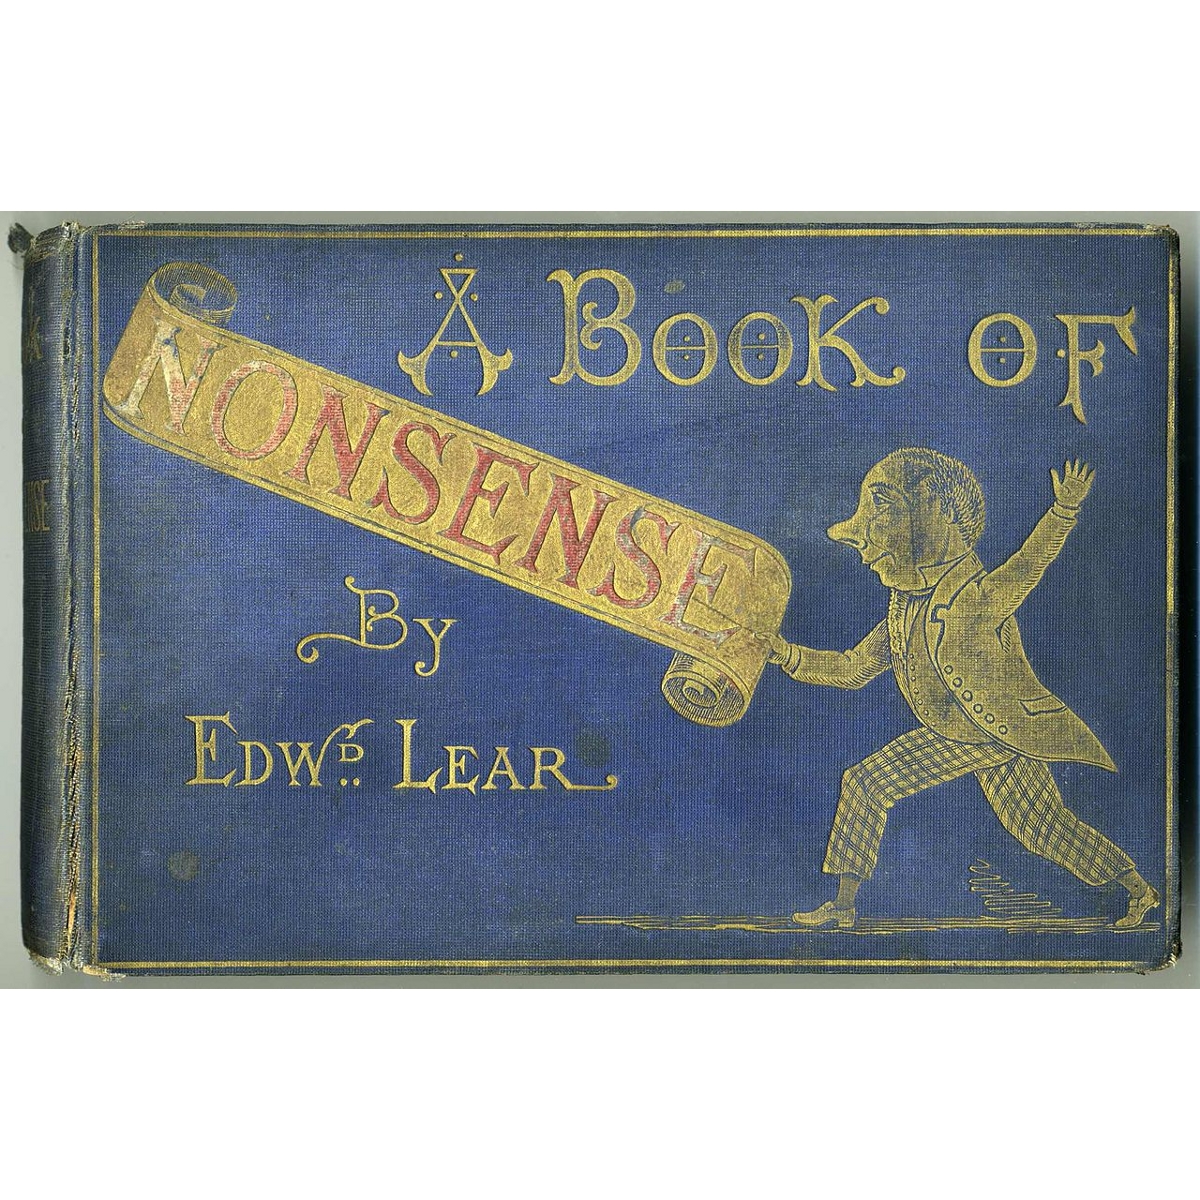 public domain image of a book of nonsense